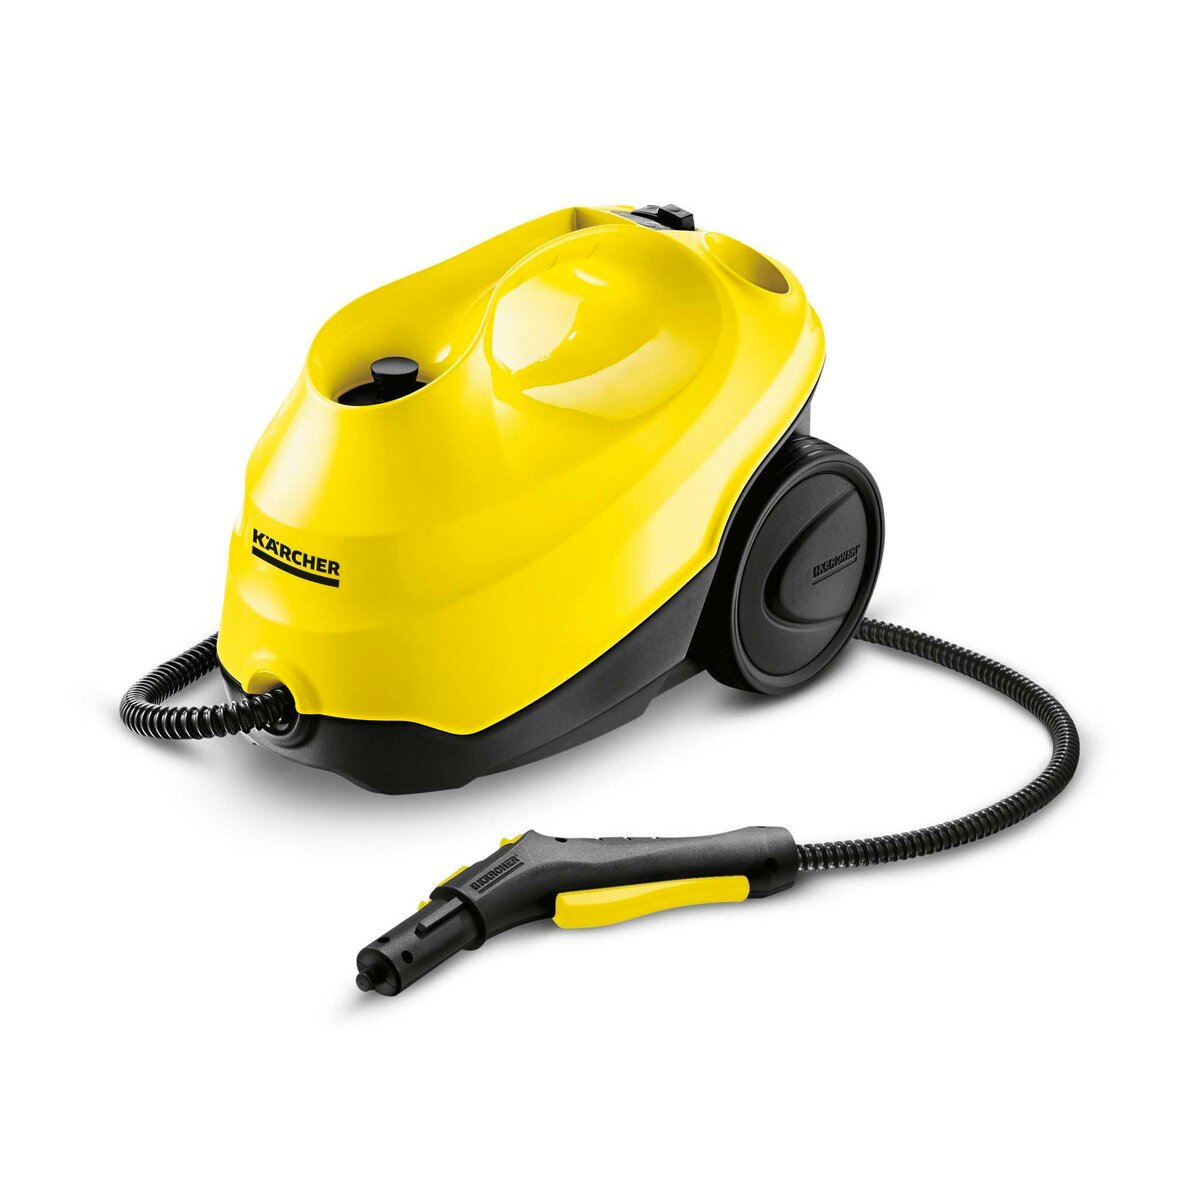 Karcher 1 L, Easy Fix Steam Cleaner, 220 - 240 V, Yellow/Black, SC 3